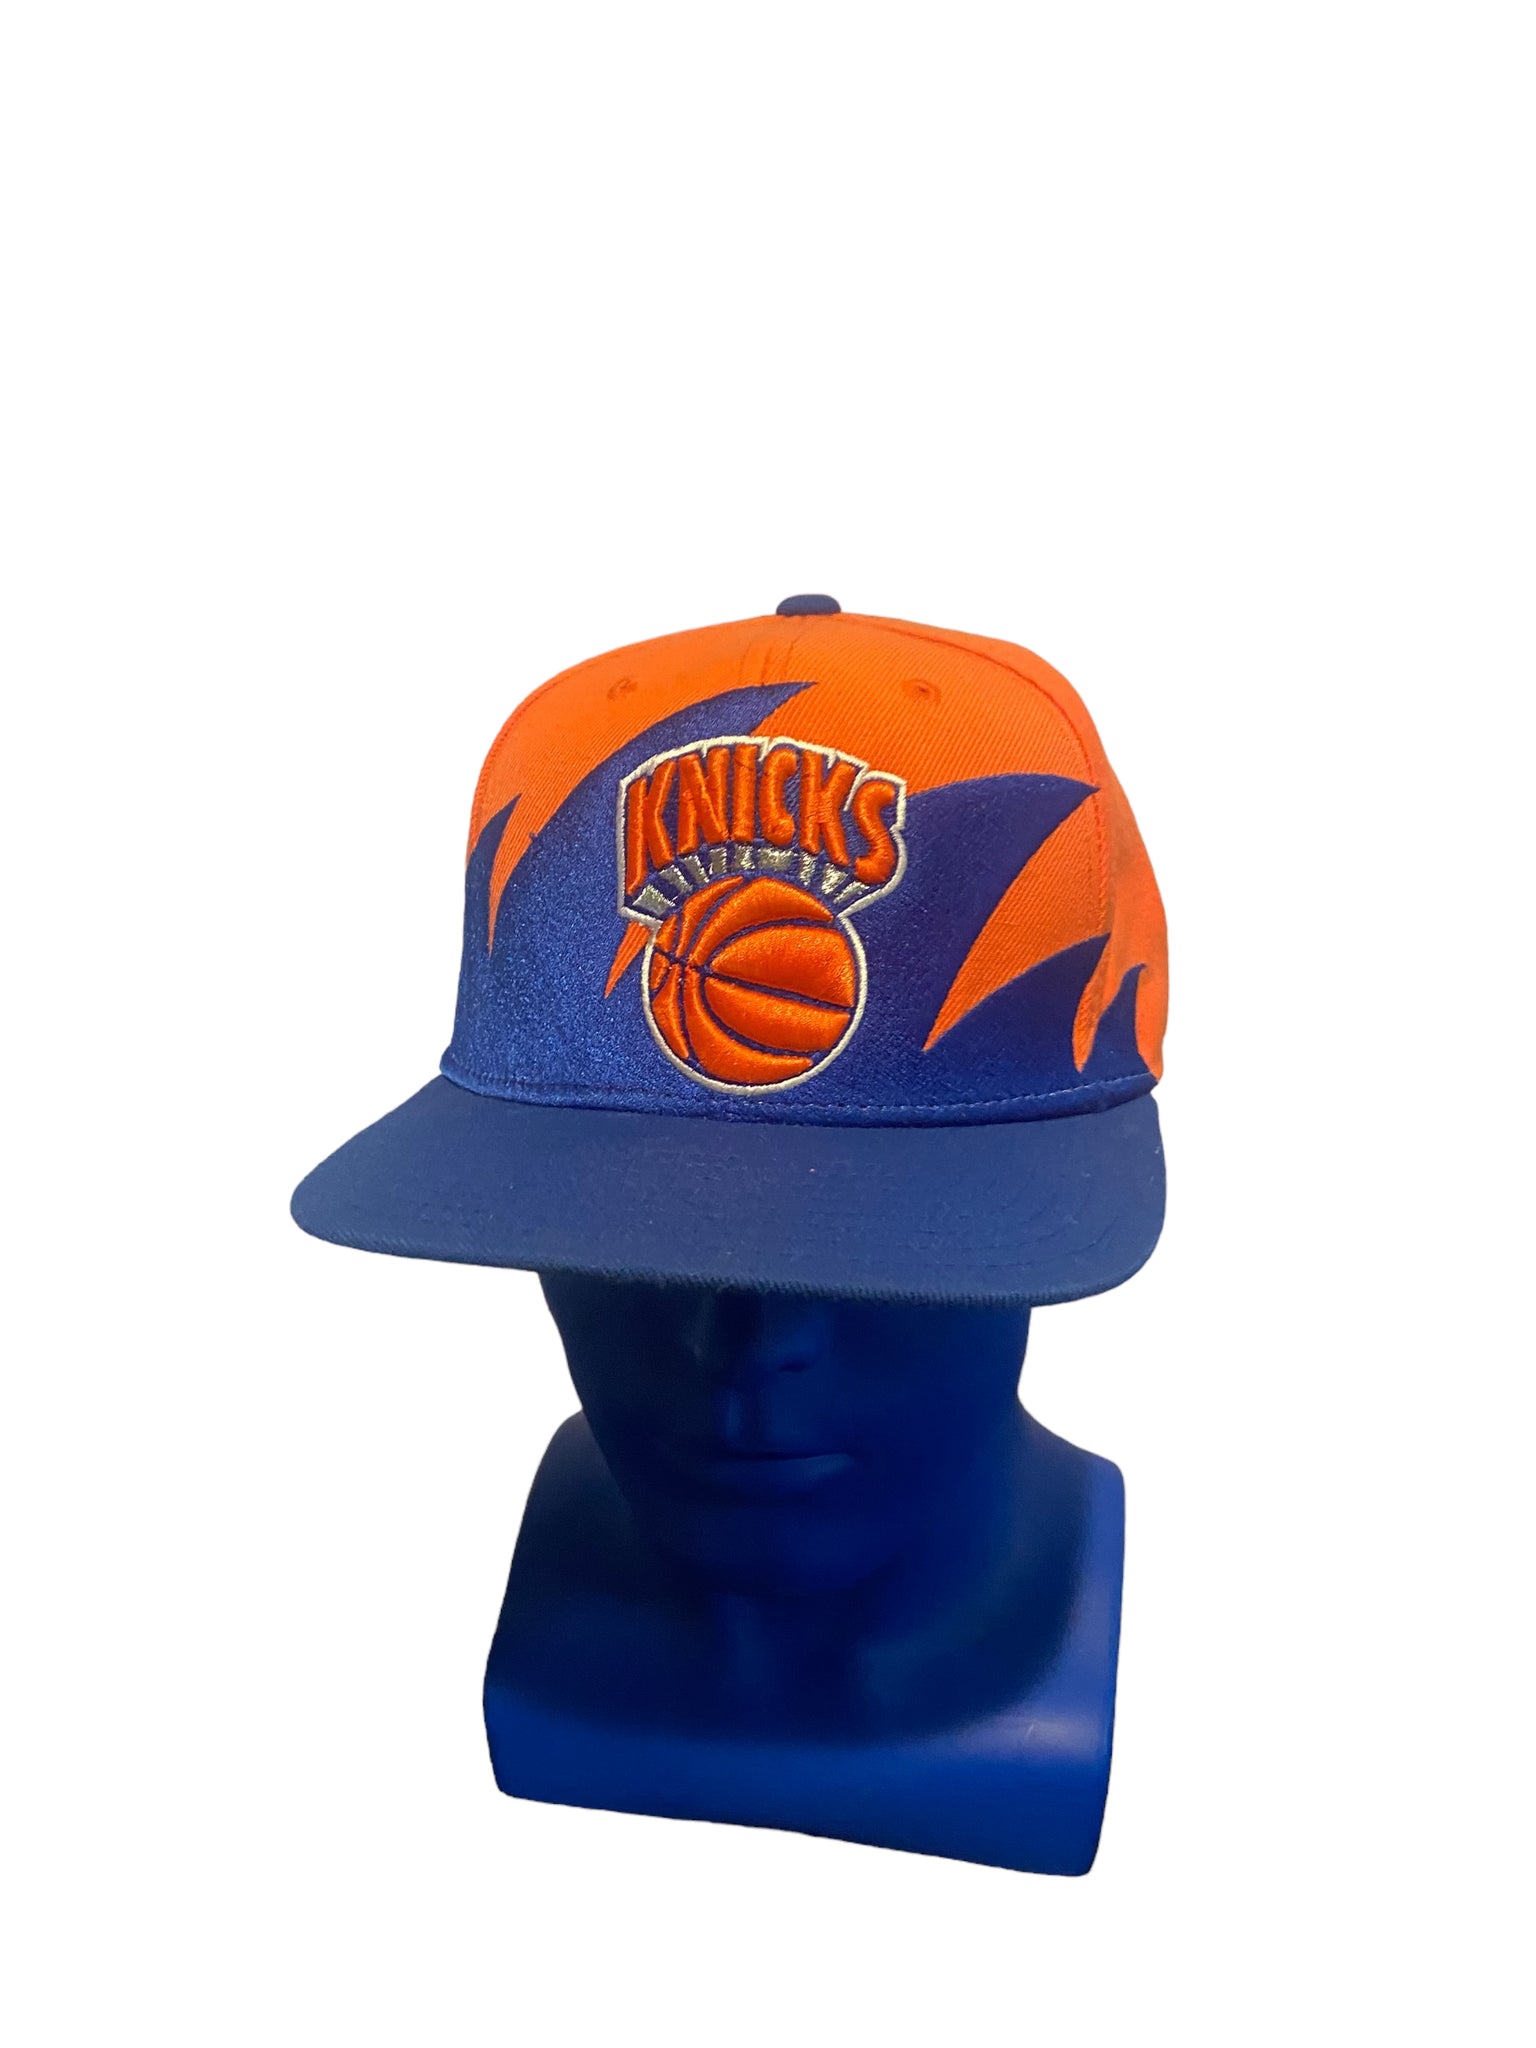 Mitchell & Ness York Knicks Hat Hardwood Classic Sharktooth  Orange/Blue NBA